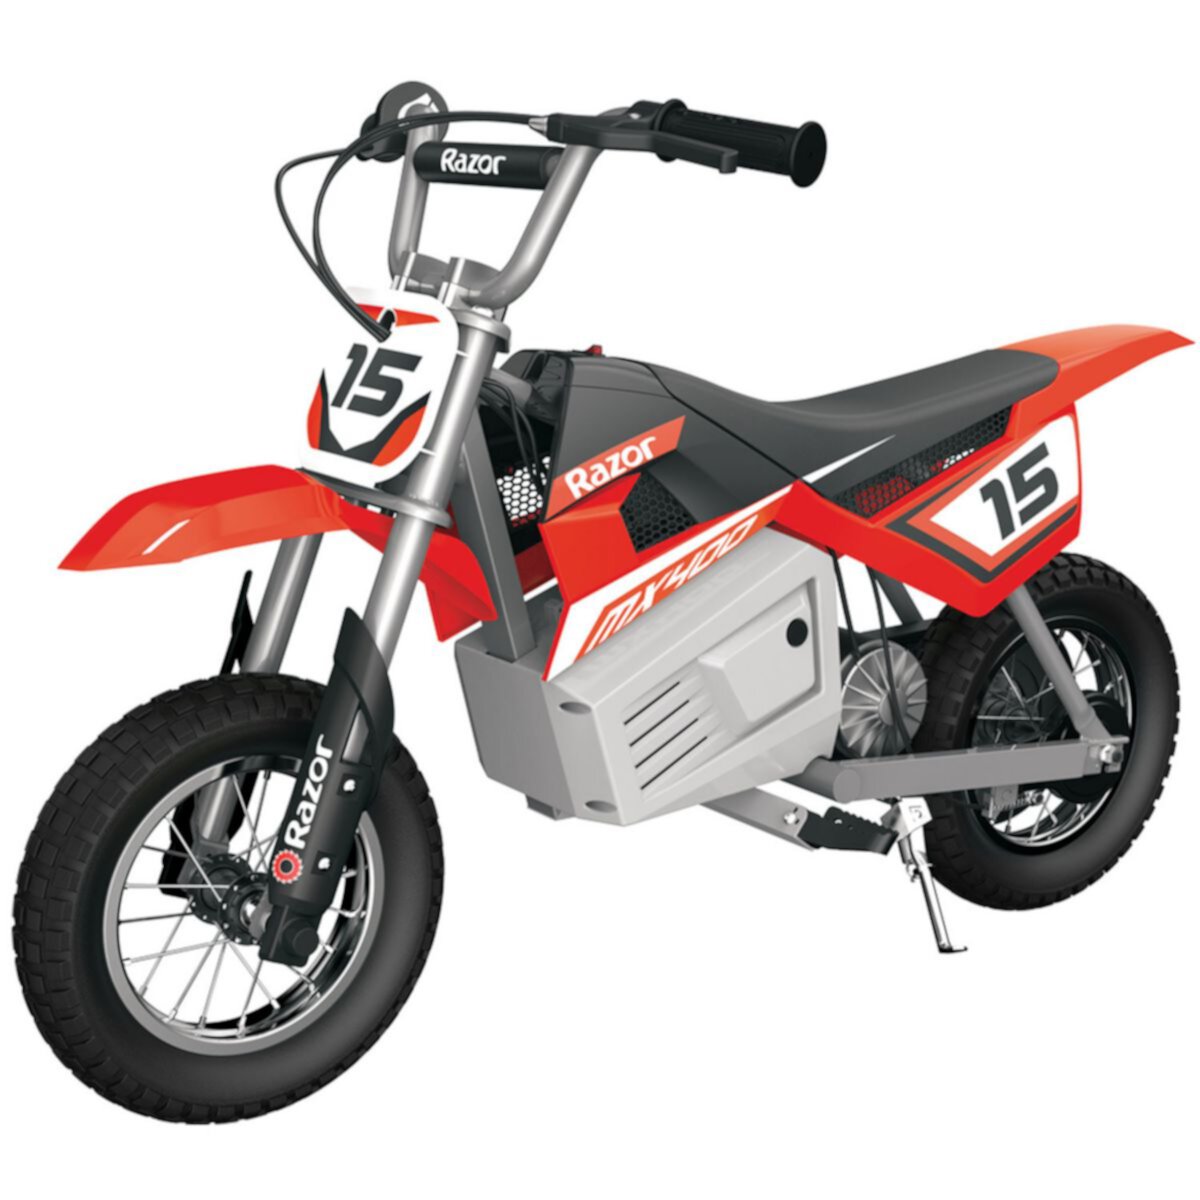 Razor MX400 Dirt Rocket 24V Electric Toy Motocross Motorcycle Dirt Bike, Red RAZOR